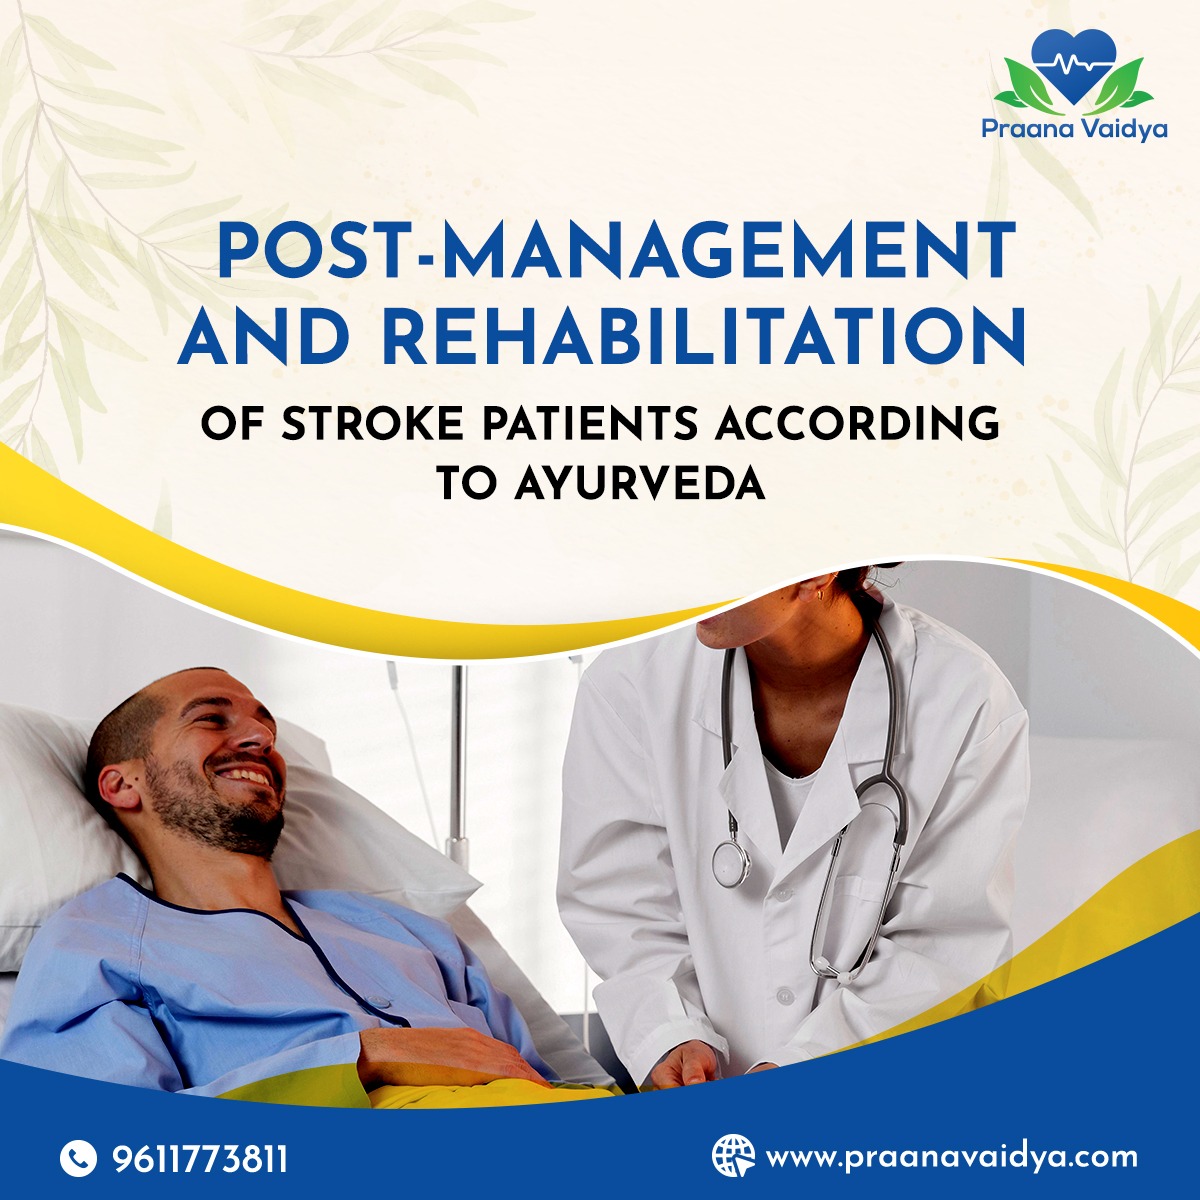 Ayurvedic treatments for stroke